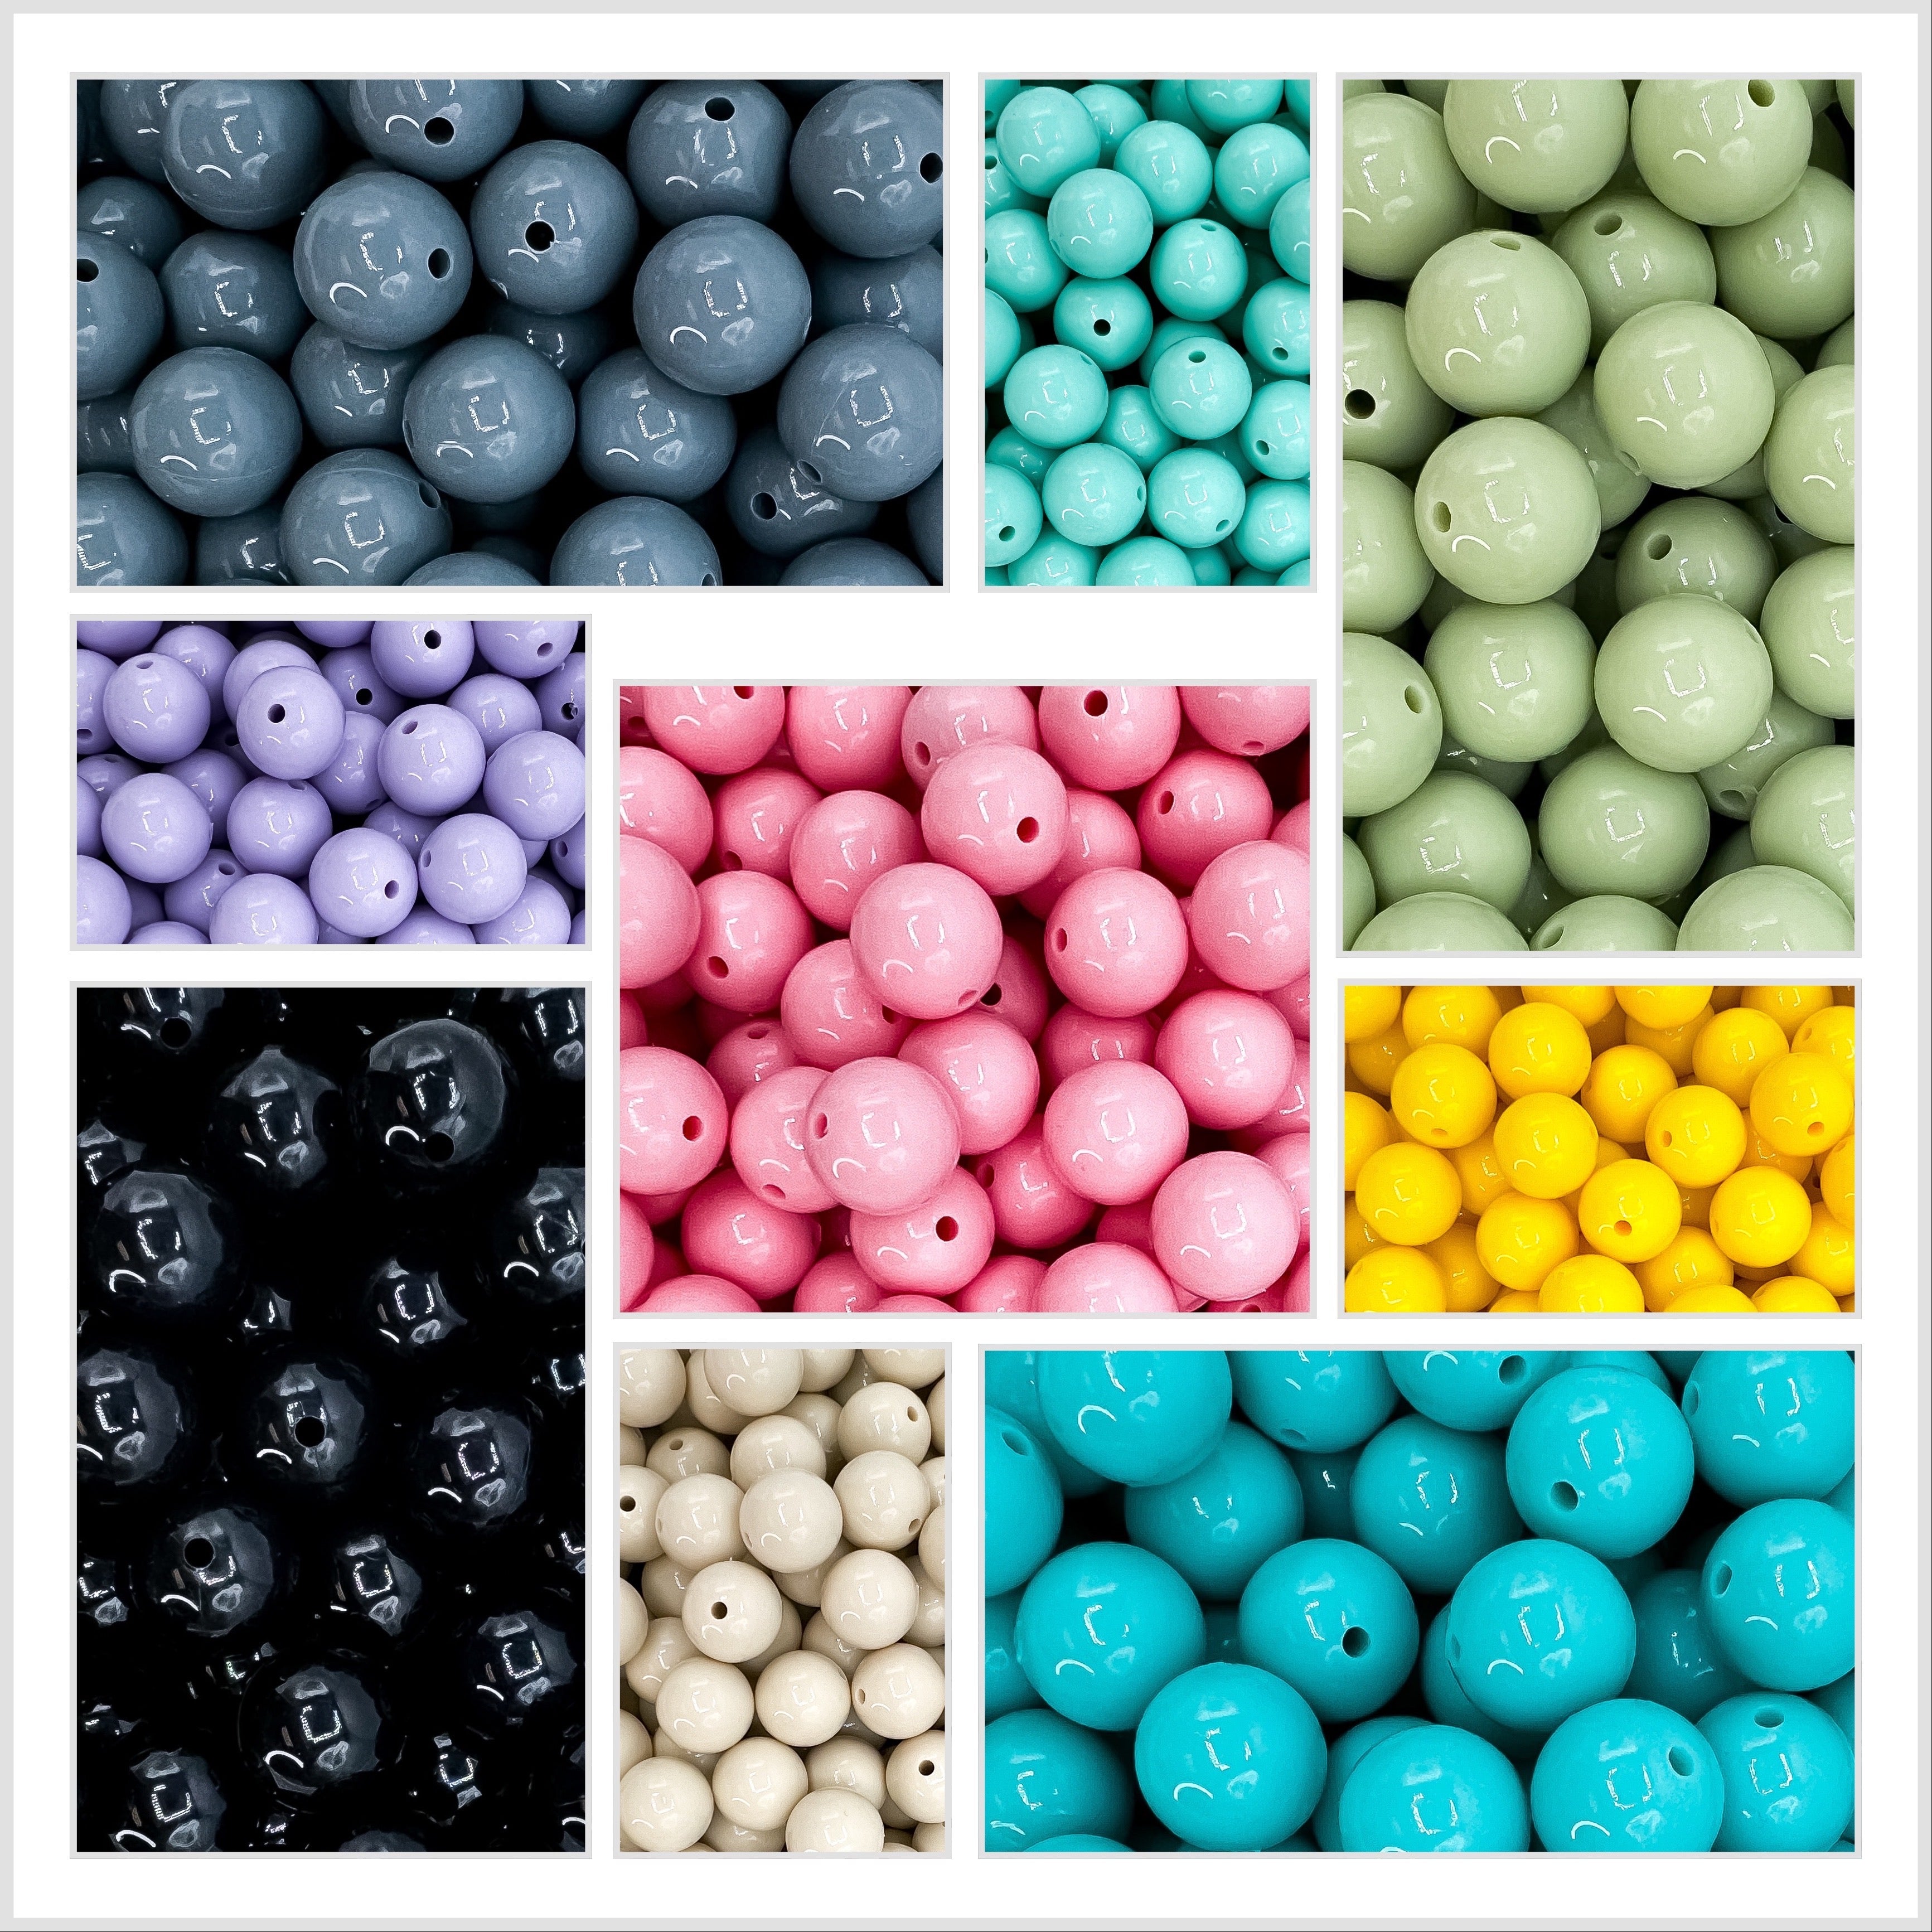 19 mm Silicone Teething Beads - American Felt & Craft